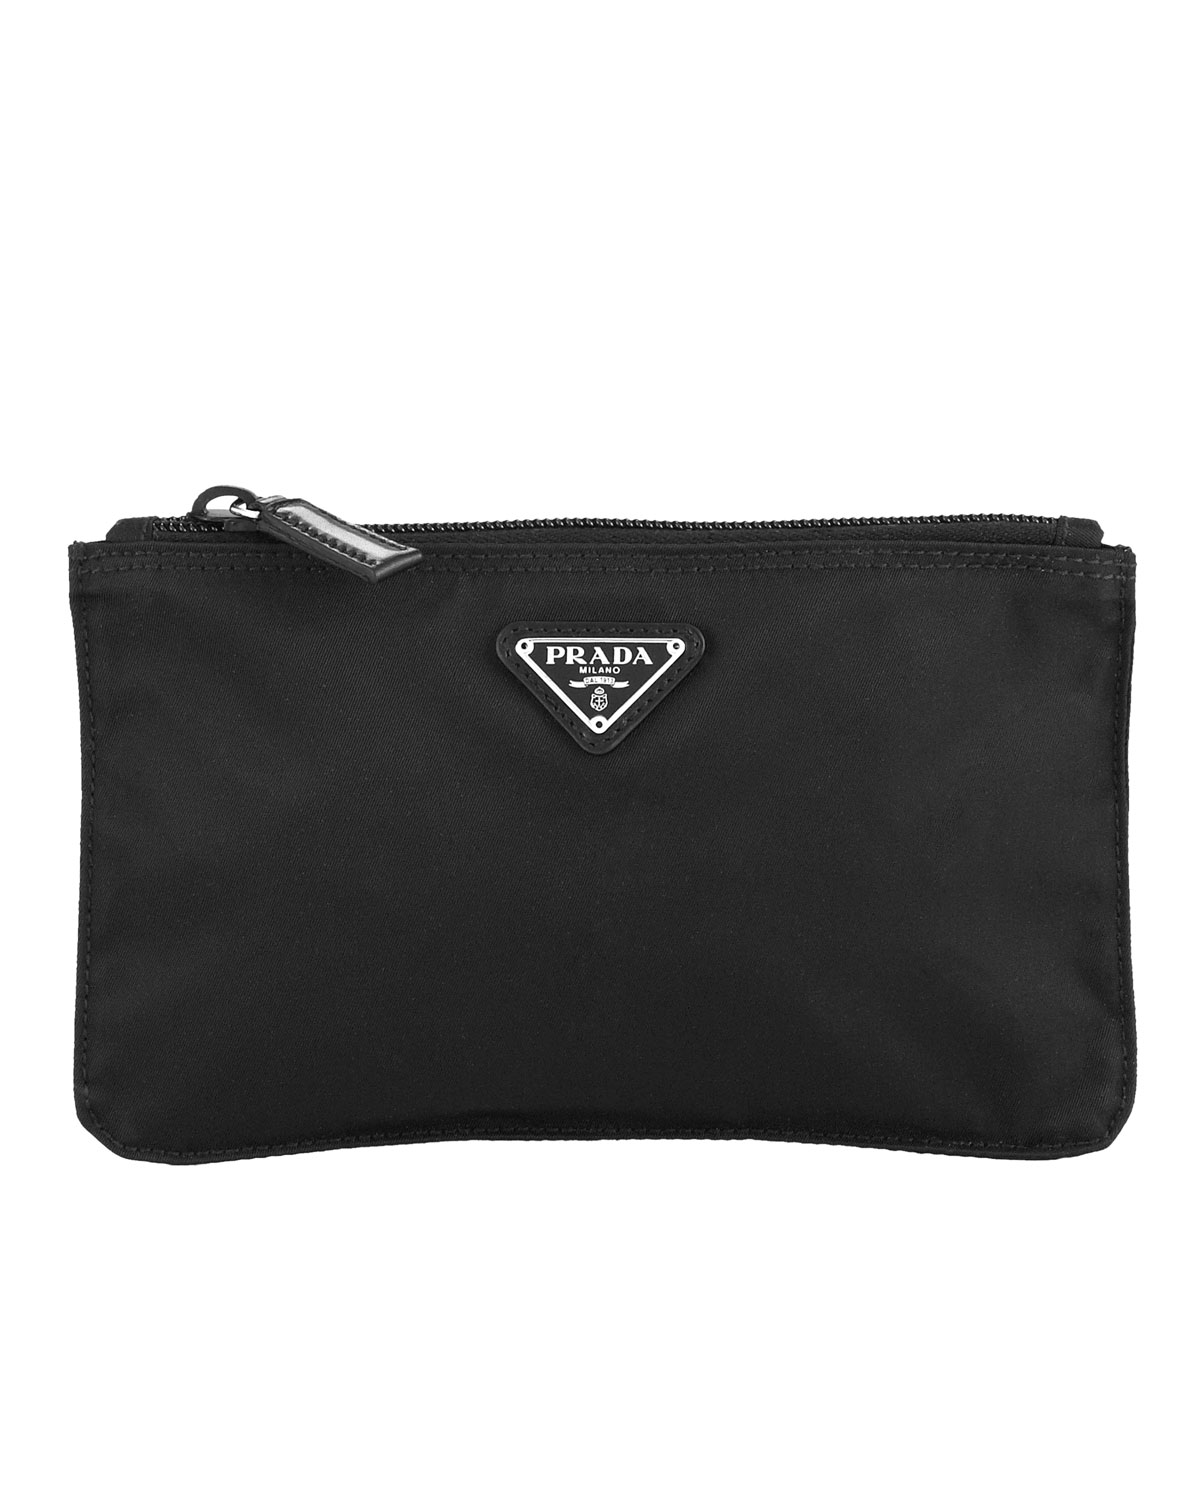 Prada Tessuto Flat Small Cosmetic Bag in Black | Lyst